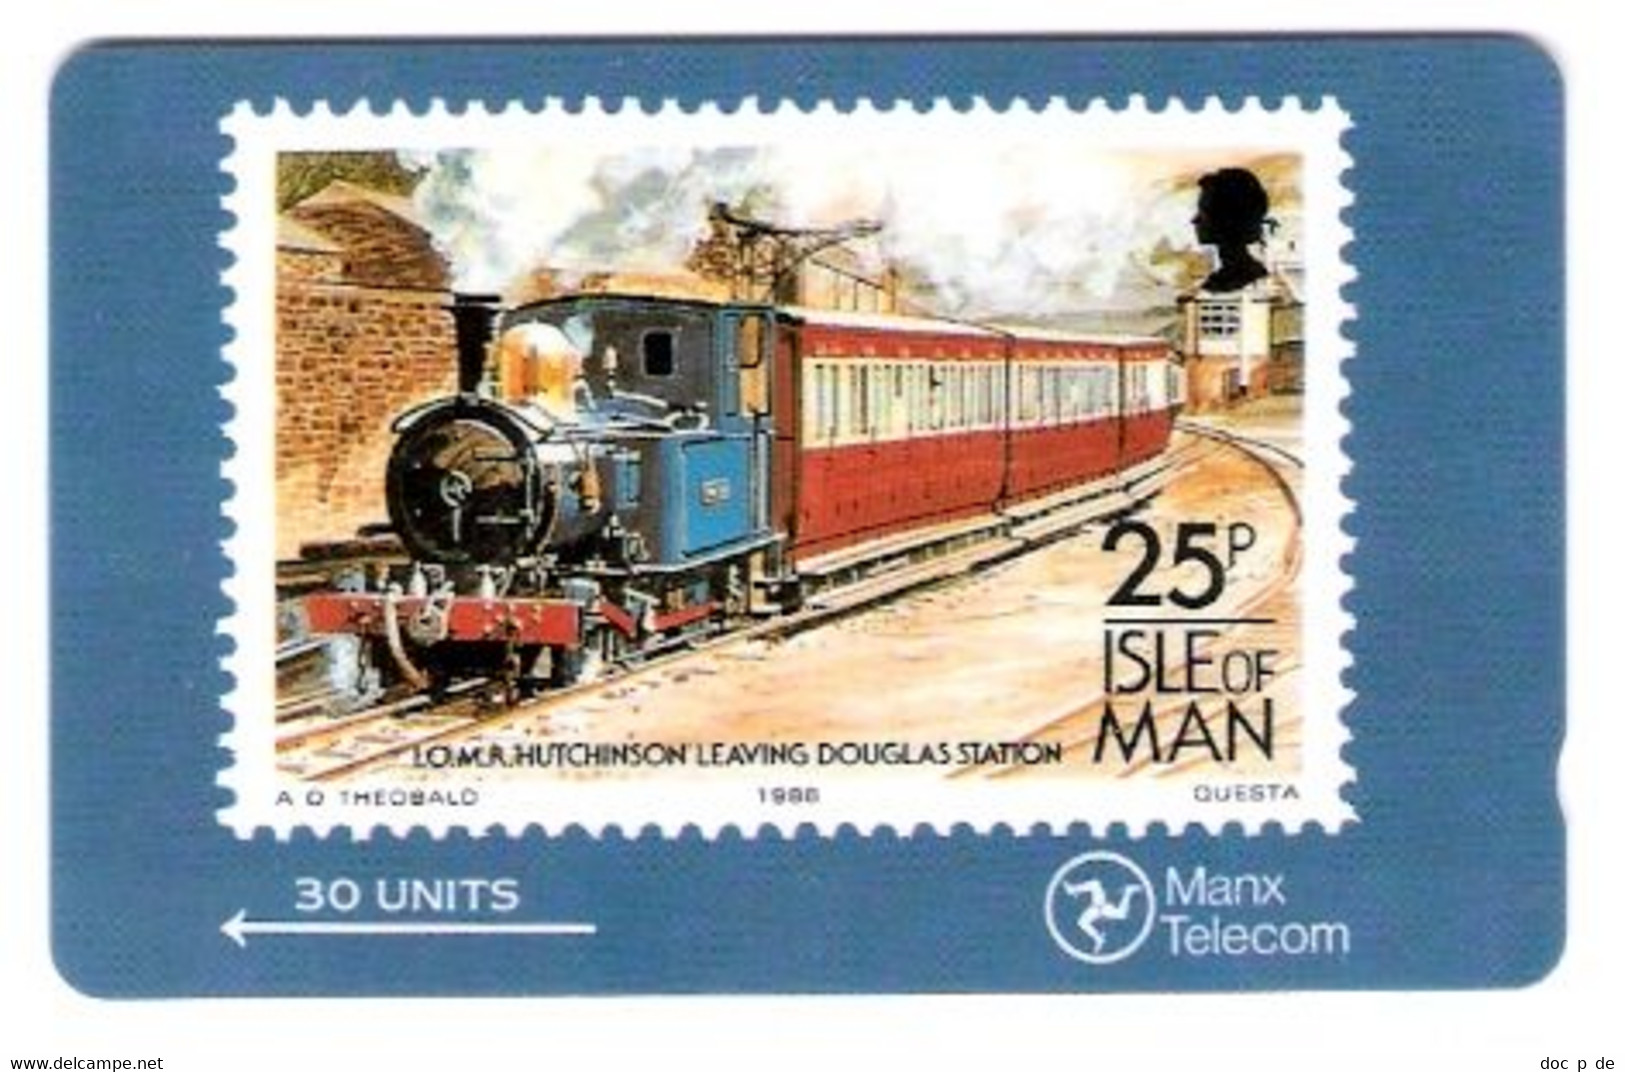 Isle Of Man - Eisenbahn Bahn Railway - Stamp - Briefmarke - Timbre - 30 Units - Man (Isle Of)